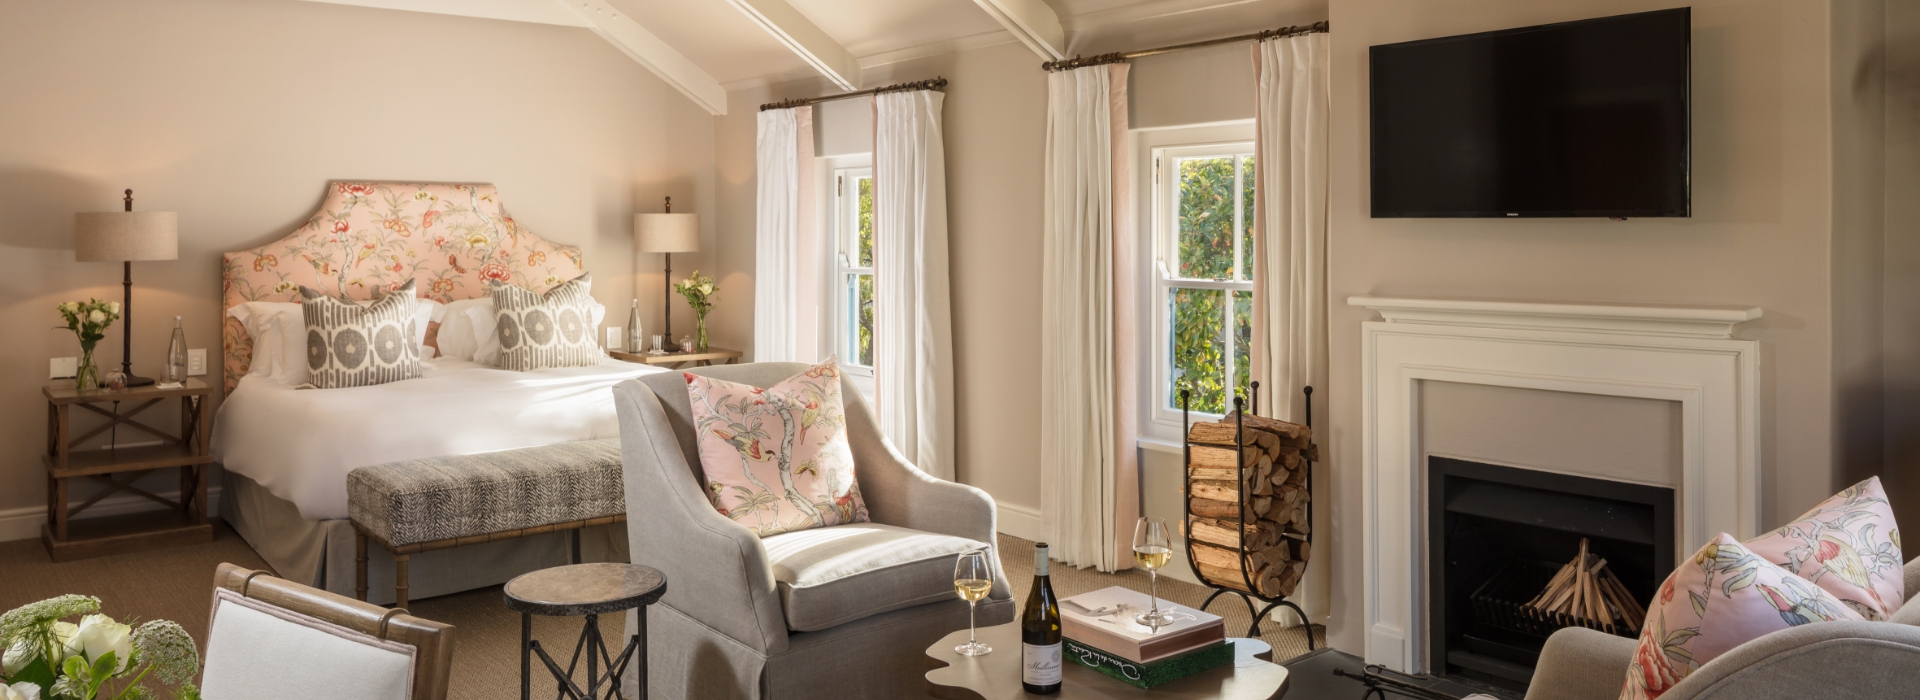 Leeucollection blog - 5 Ways to Enjoy a Suite Stay at Le Quartier Français hero slide 2